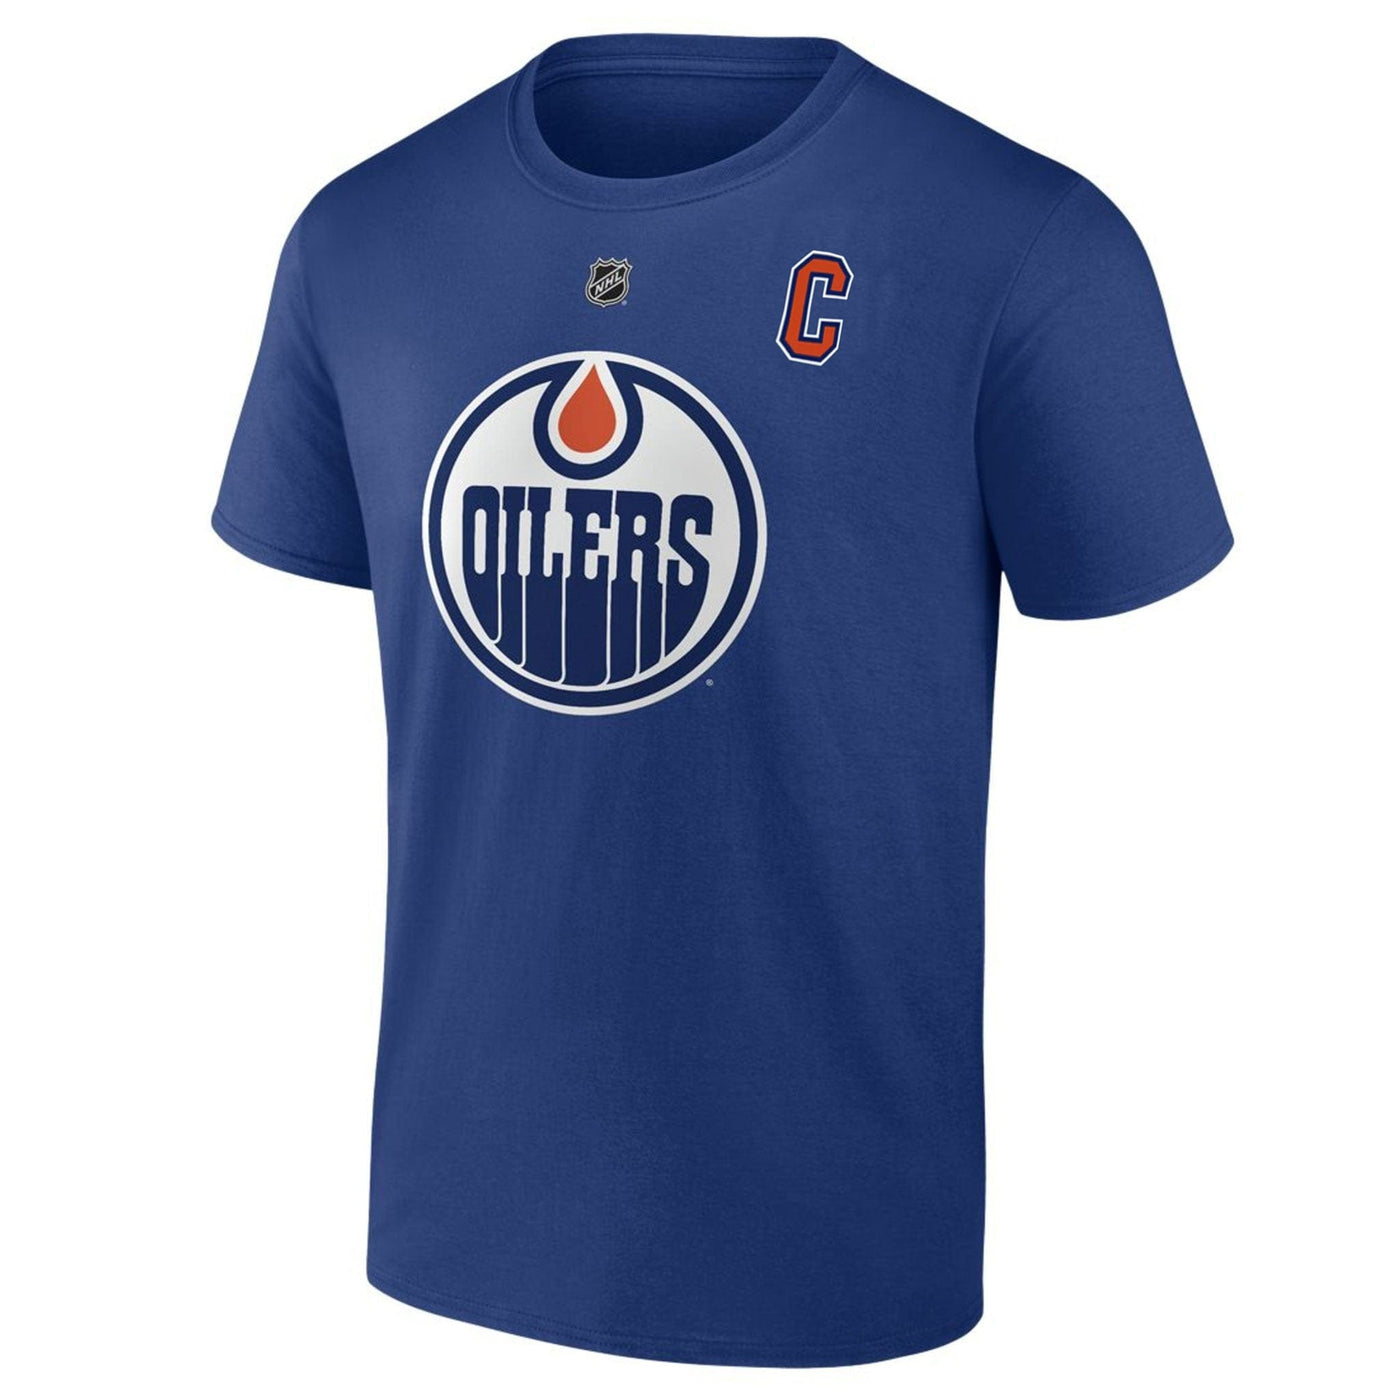 Outer Stuff N&N Infant Shortsleeve Shirt - Edmonton Oilers Connor McDavid - TheHockeyShop.com